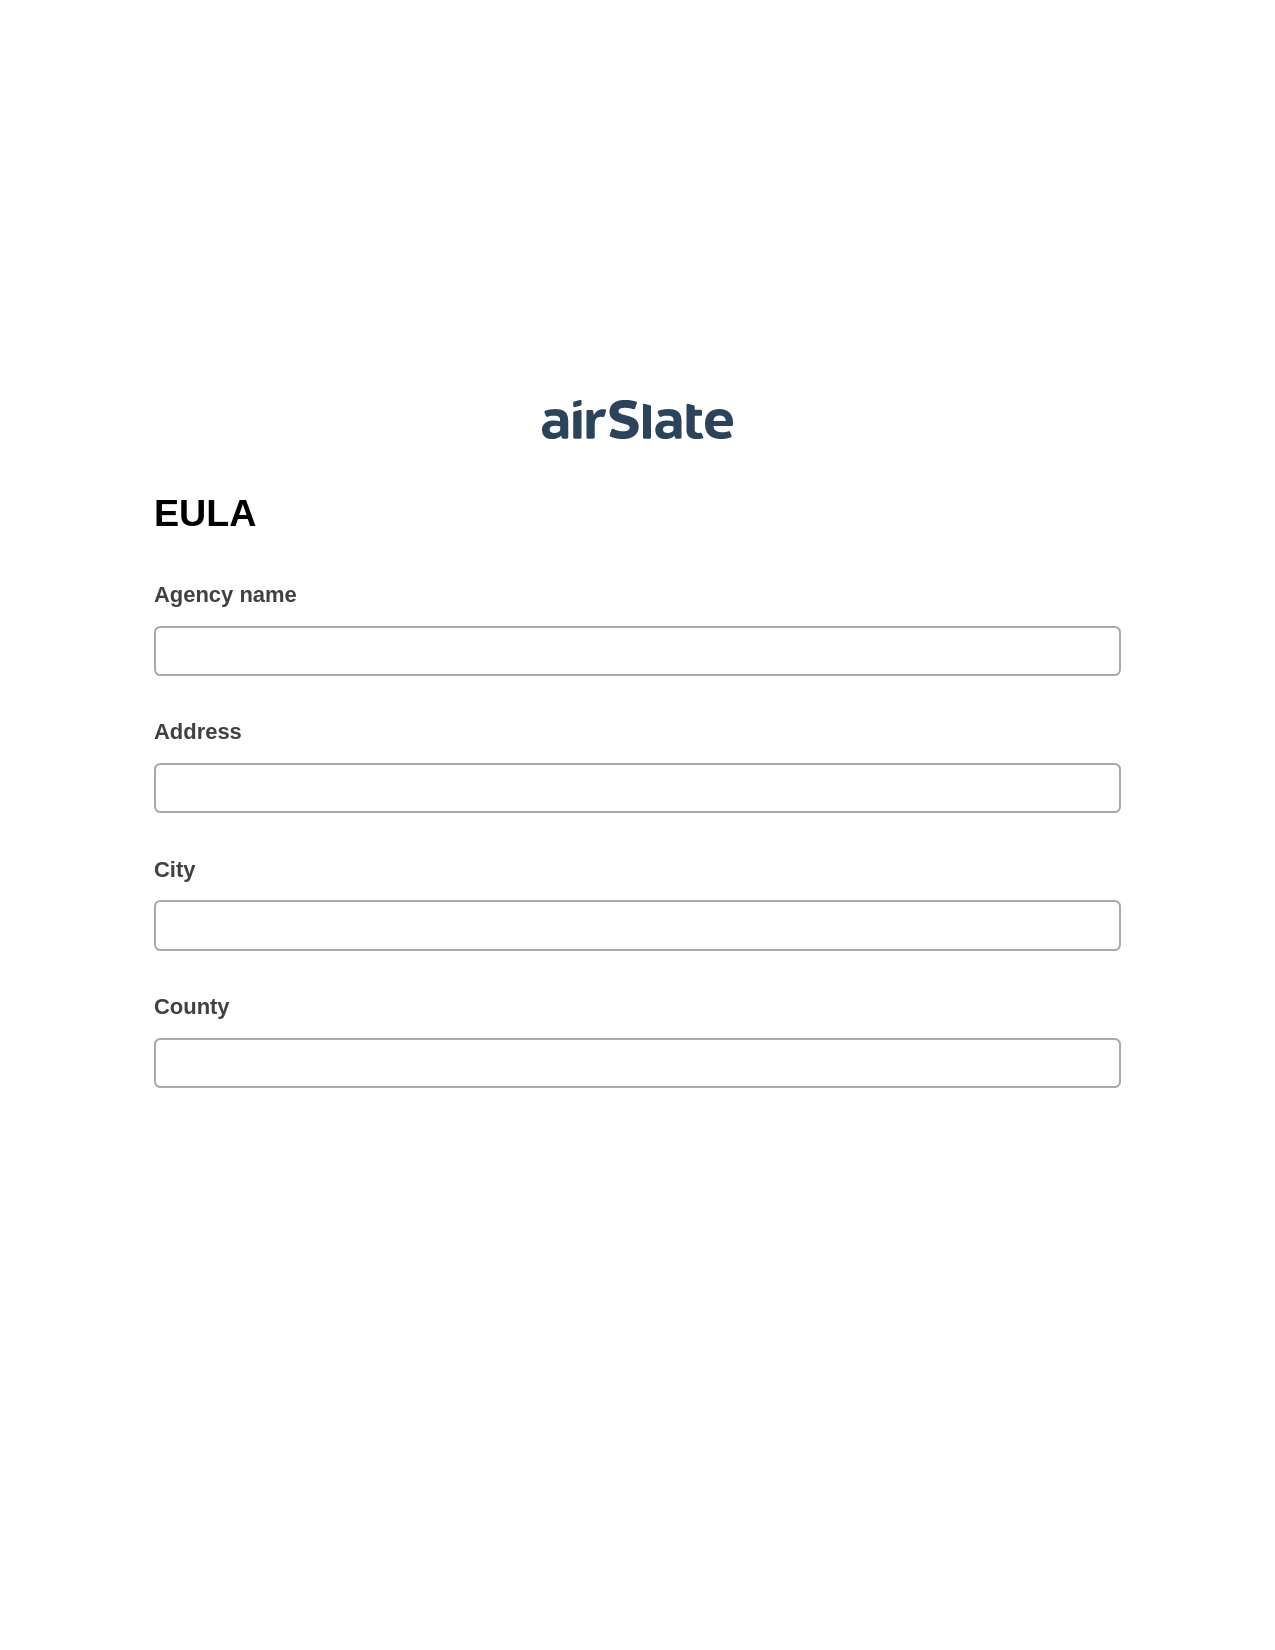 EULA Pre-fill from CSV File Bot, Google Cloud Print Bot, Google Drive Bot